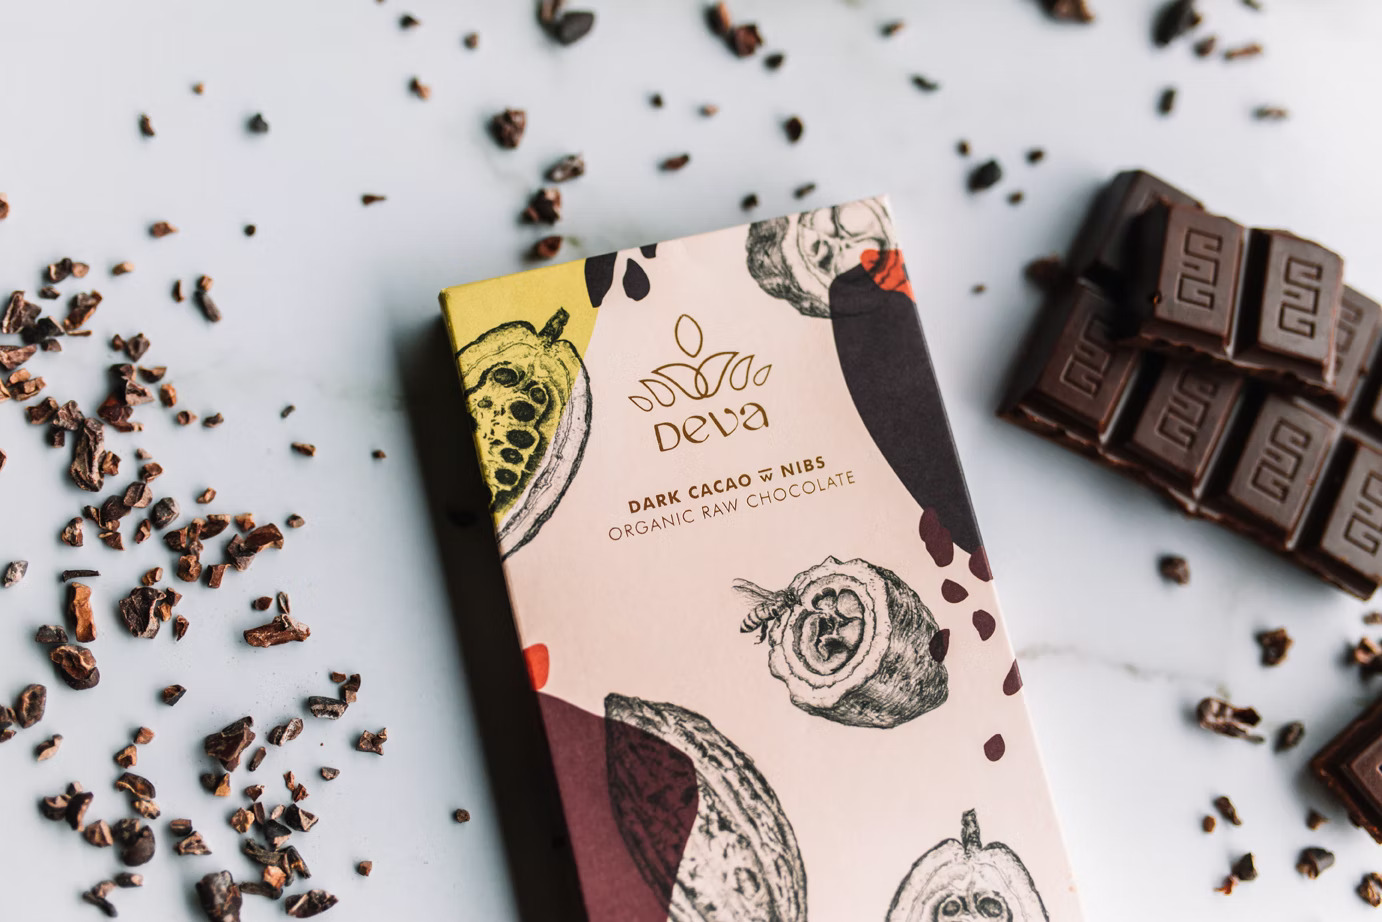 Organic raw chocolate bar from Deva Cacao